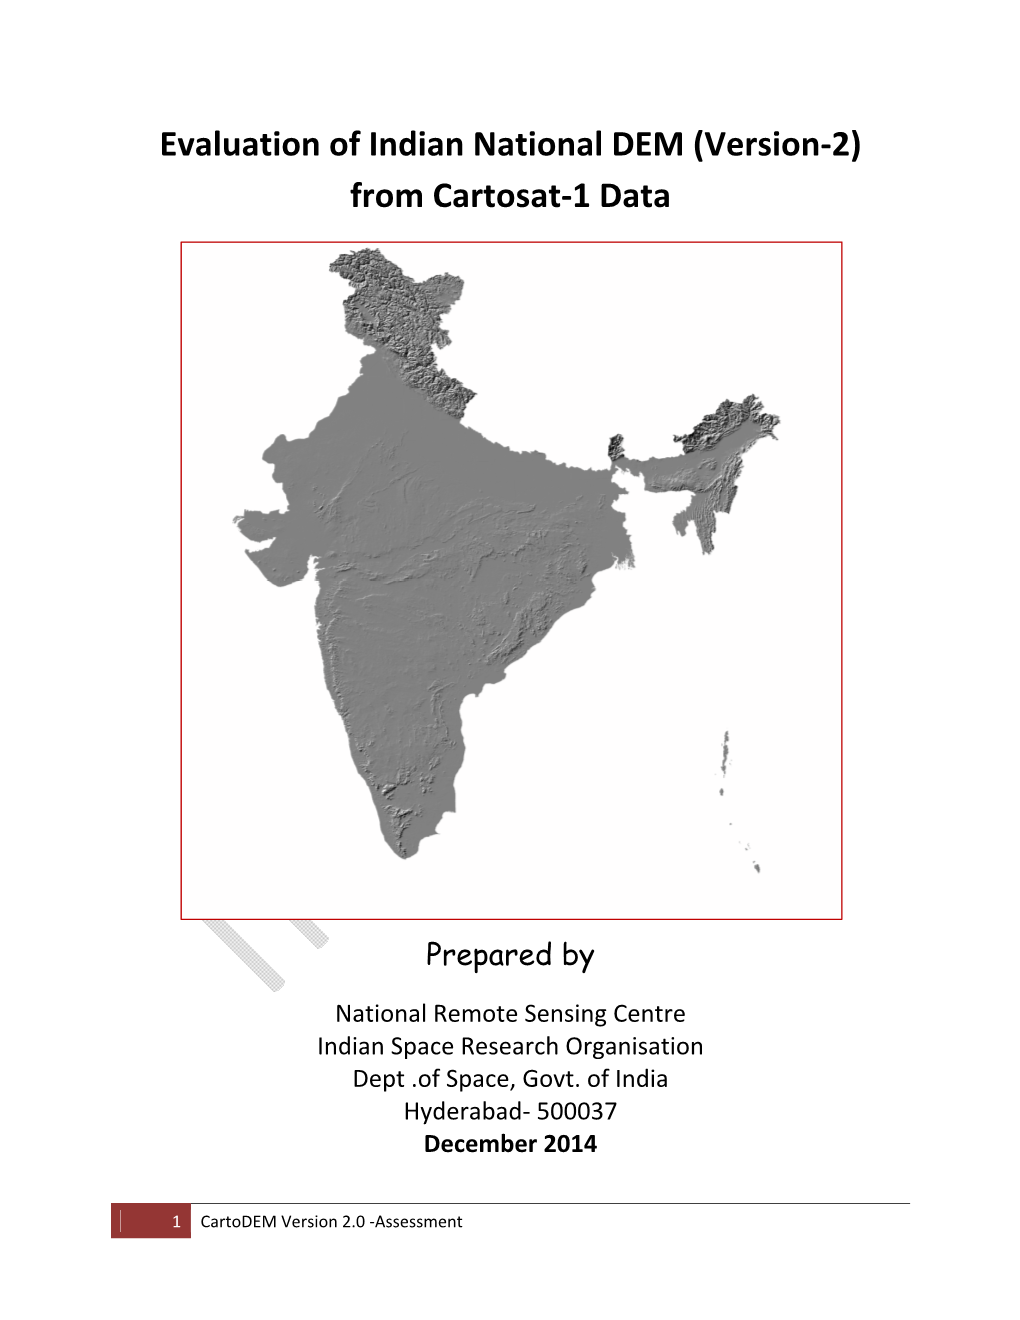 Evaluation of Indian National DEM (Version-2) from Cartosat-1 Data